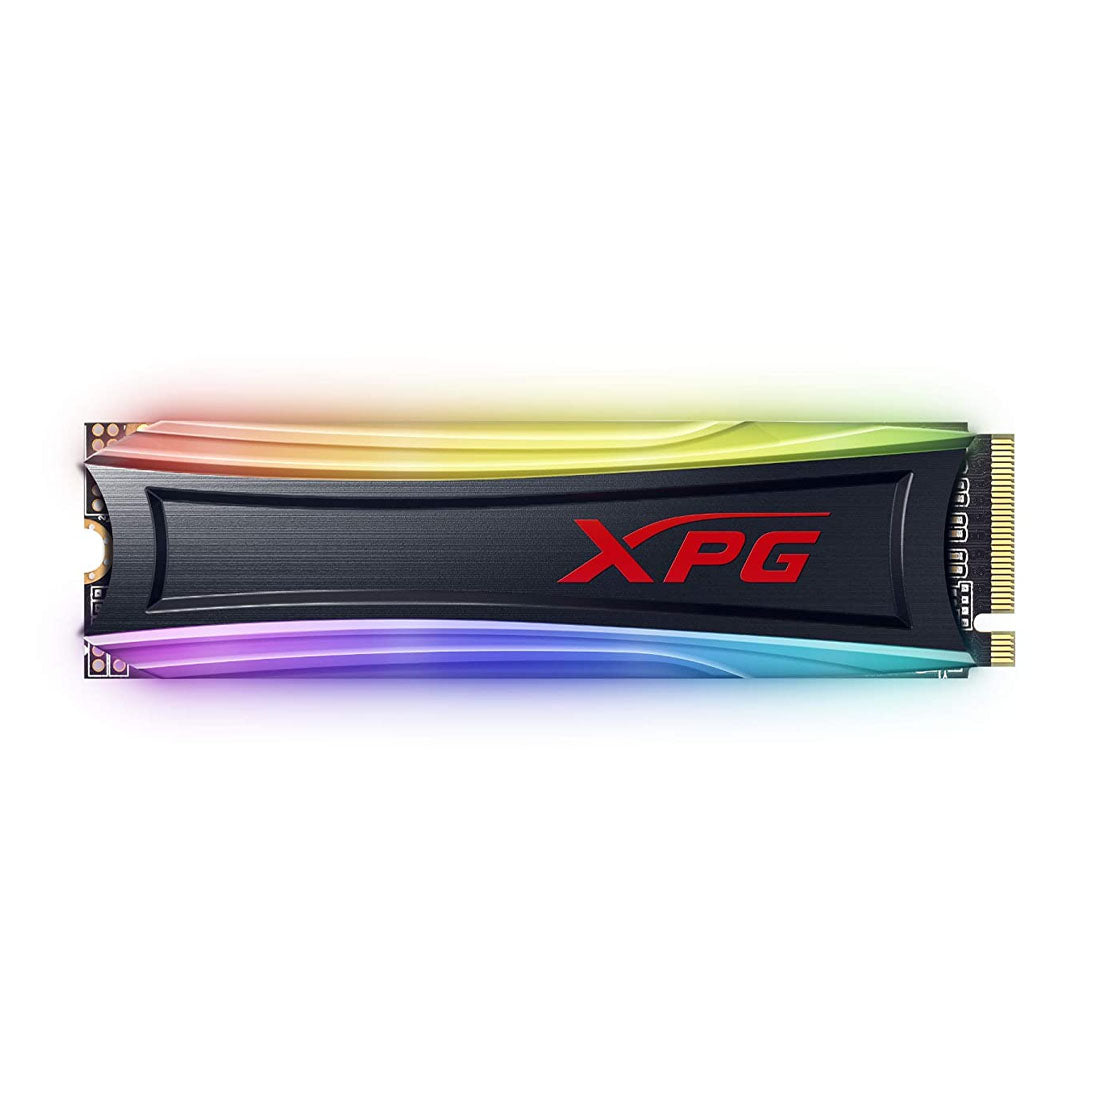 ADATA XPG SPECTRIX S40G 256GB M.2 2280 RGB Gaming Internal SSD